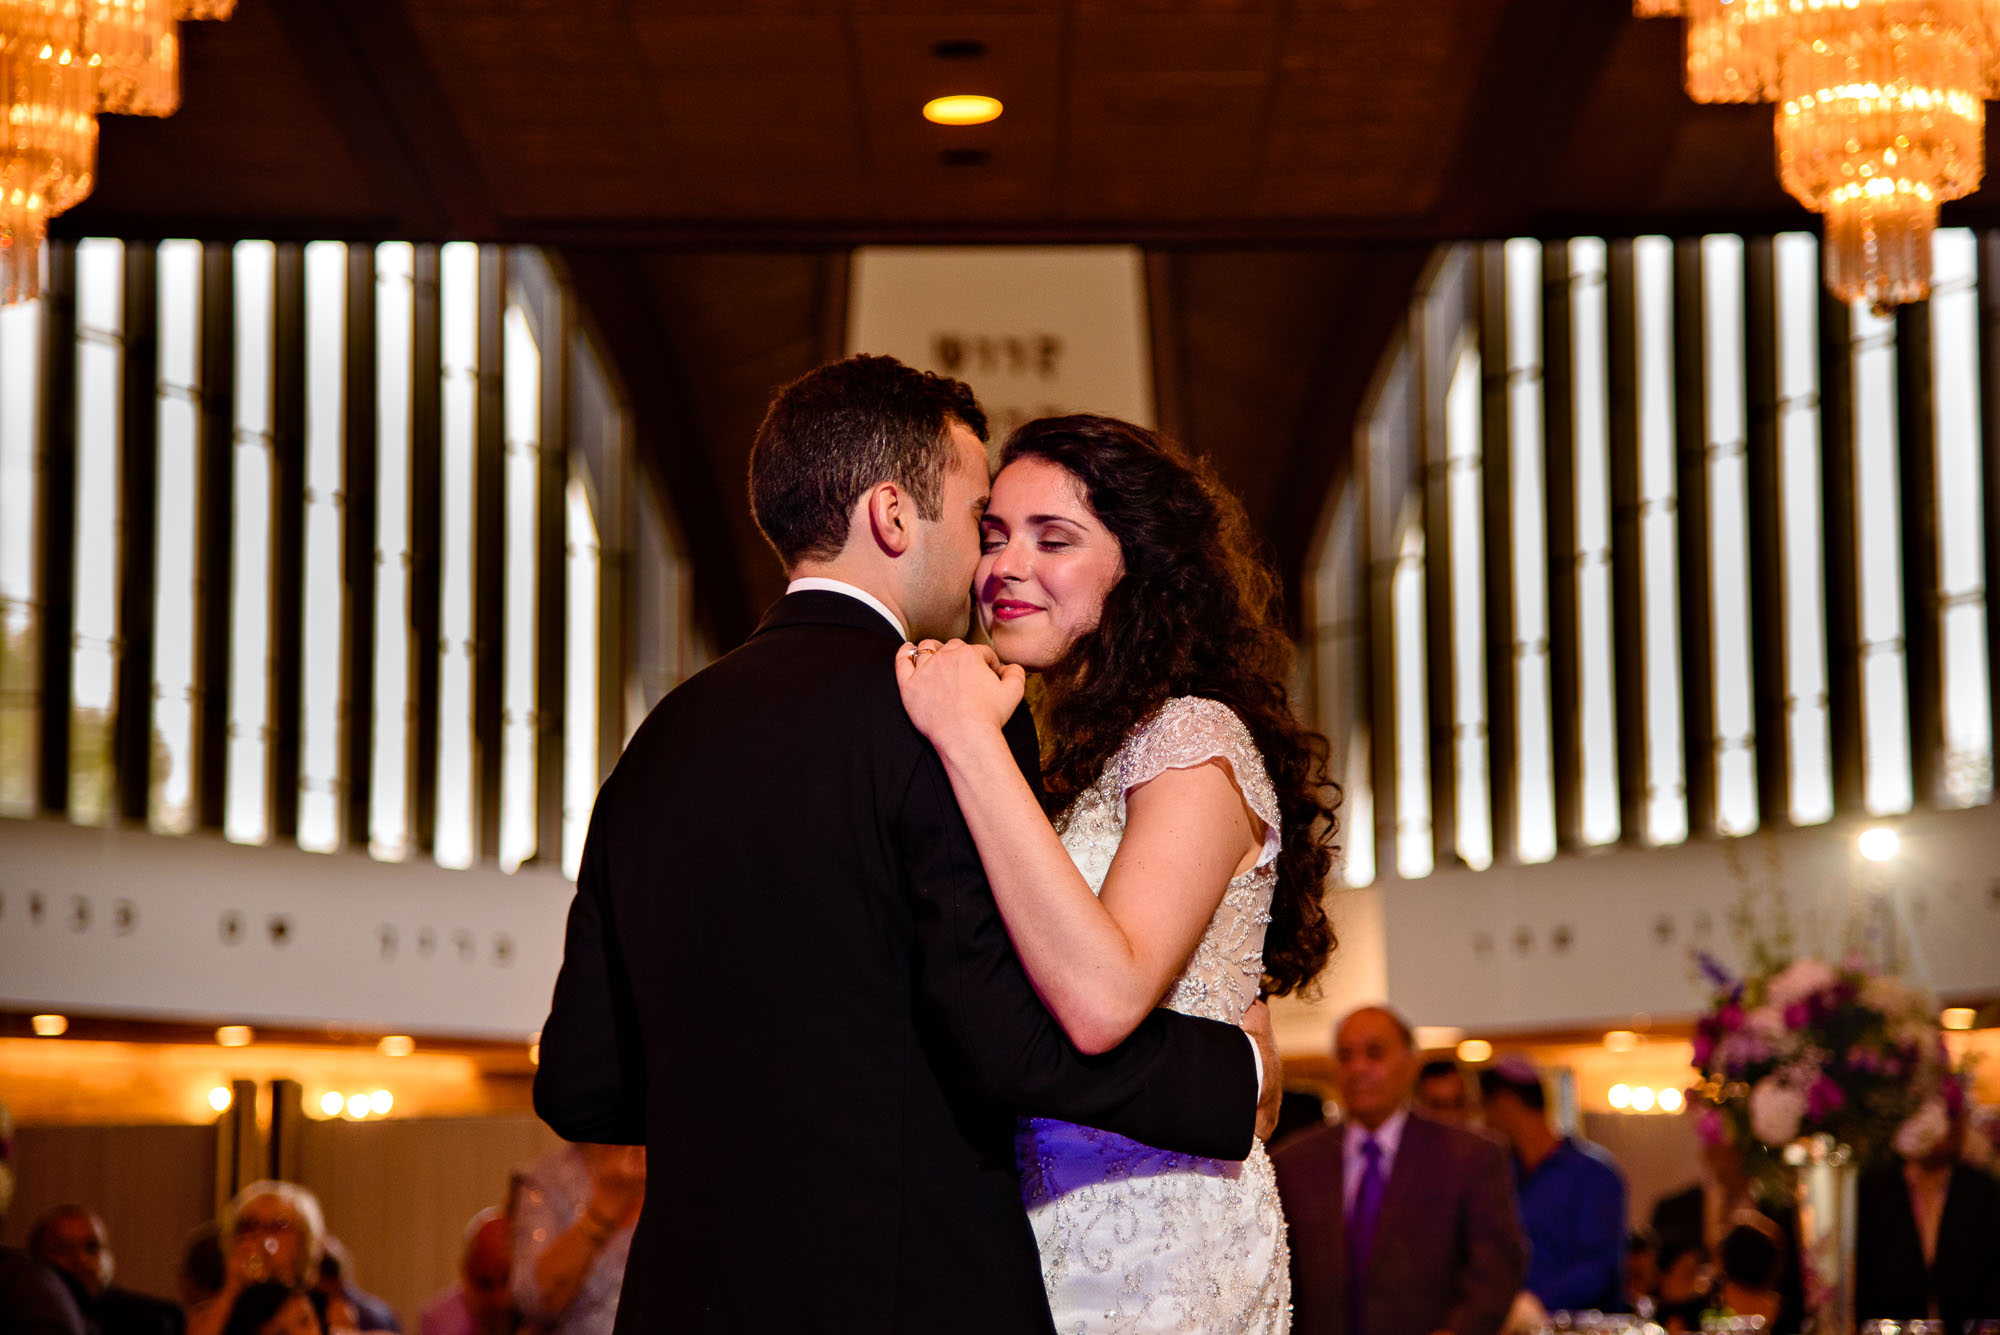 The Sephardic Temple wedding reception